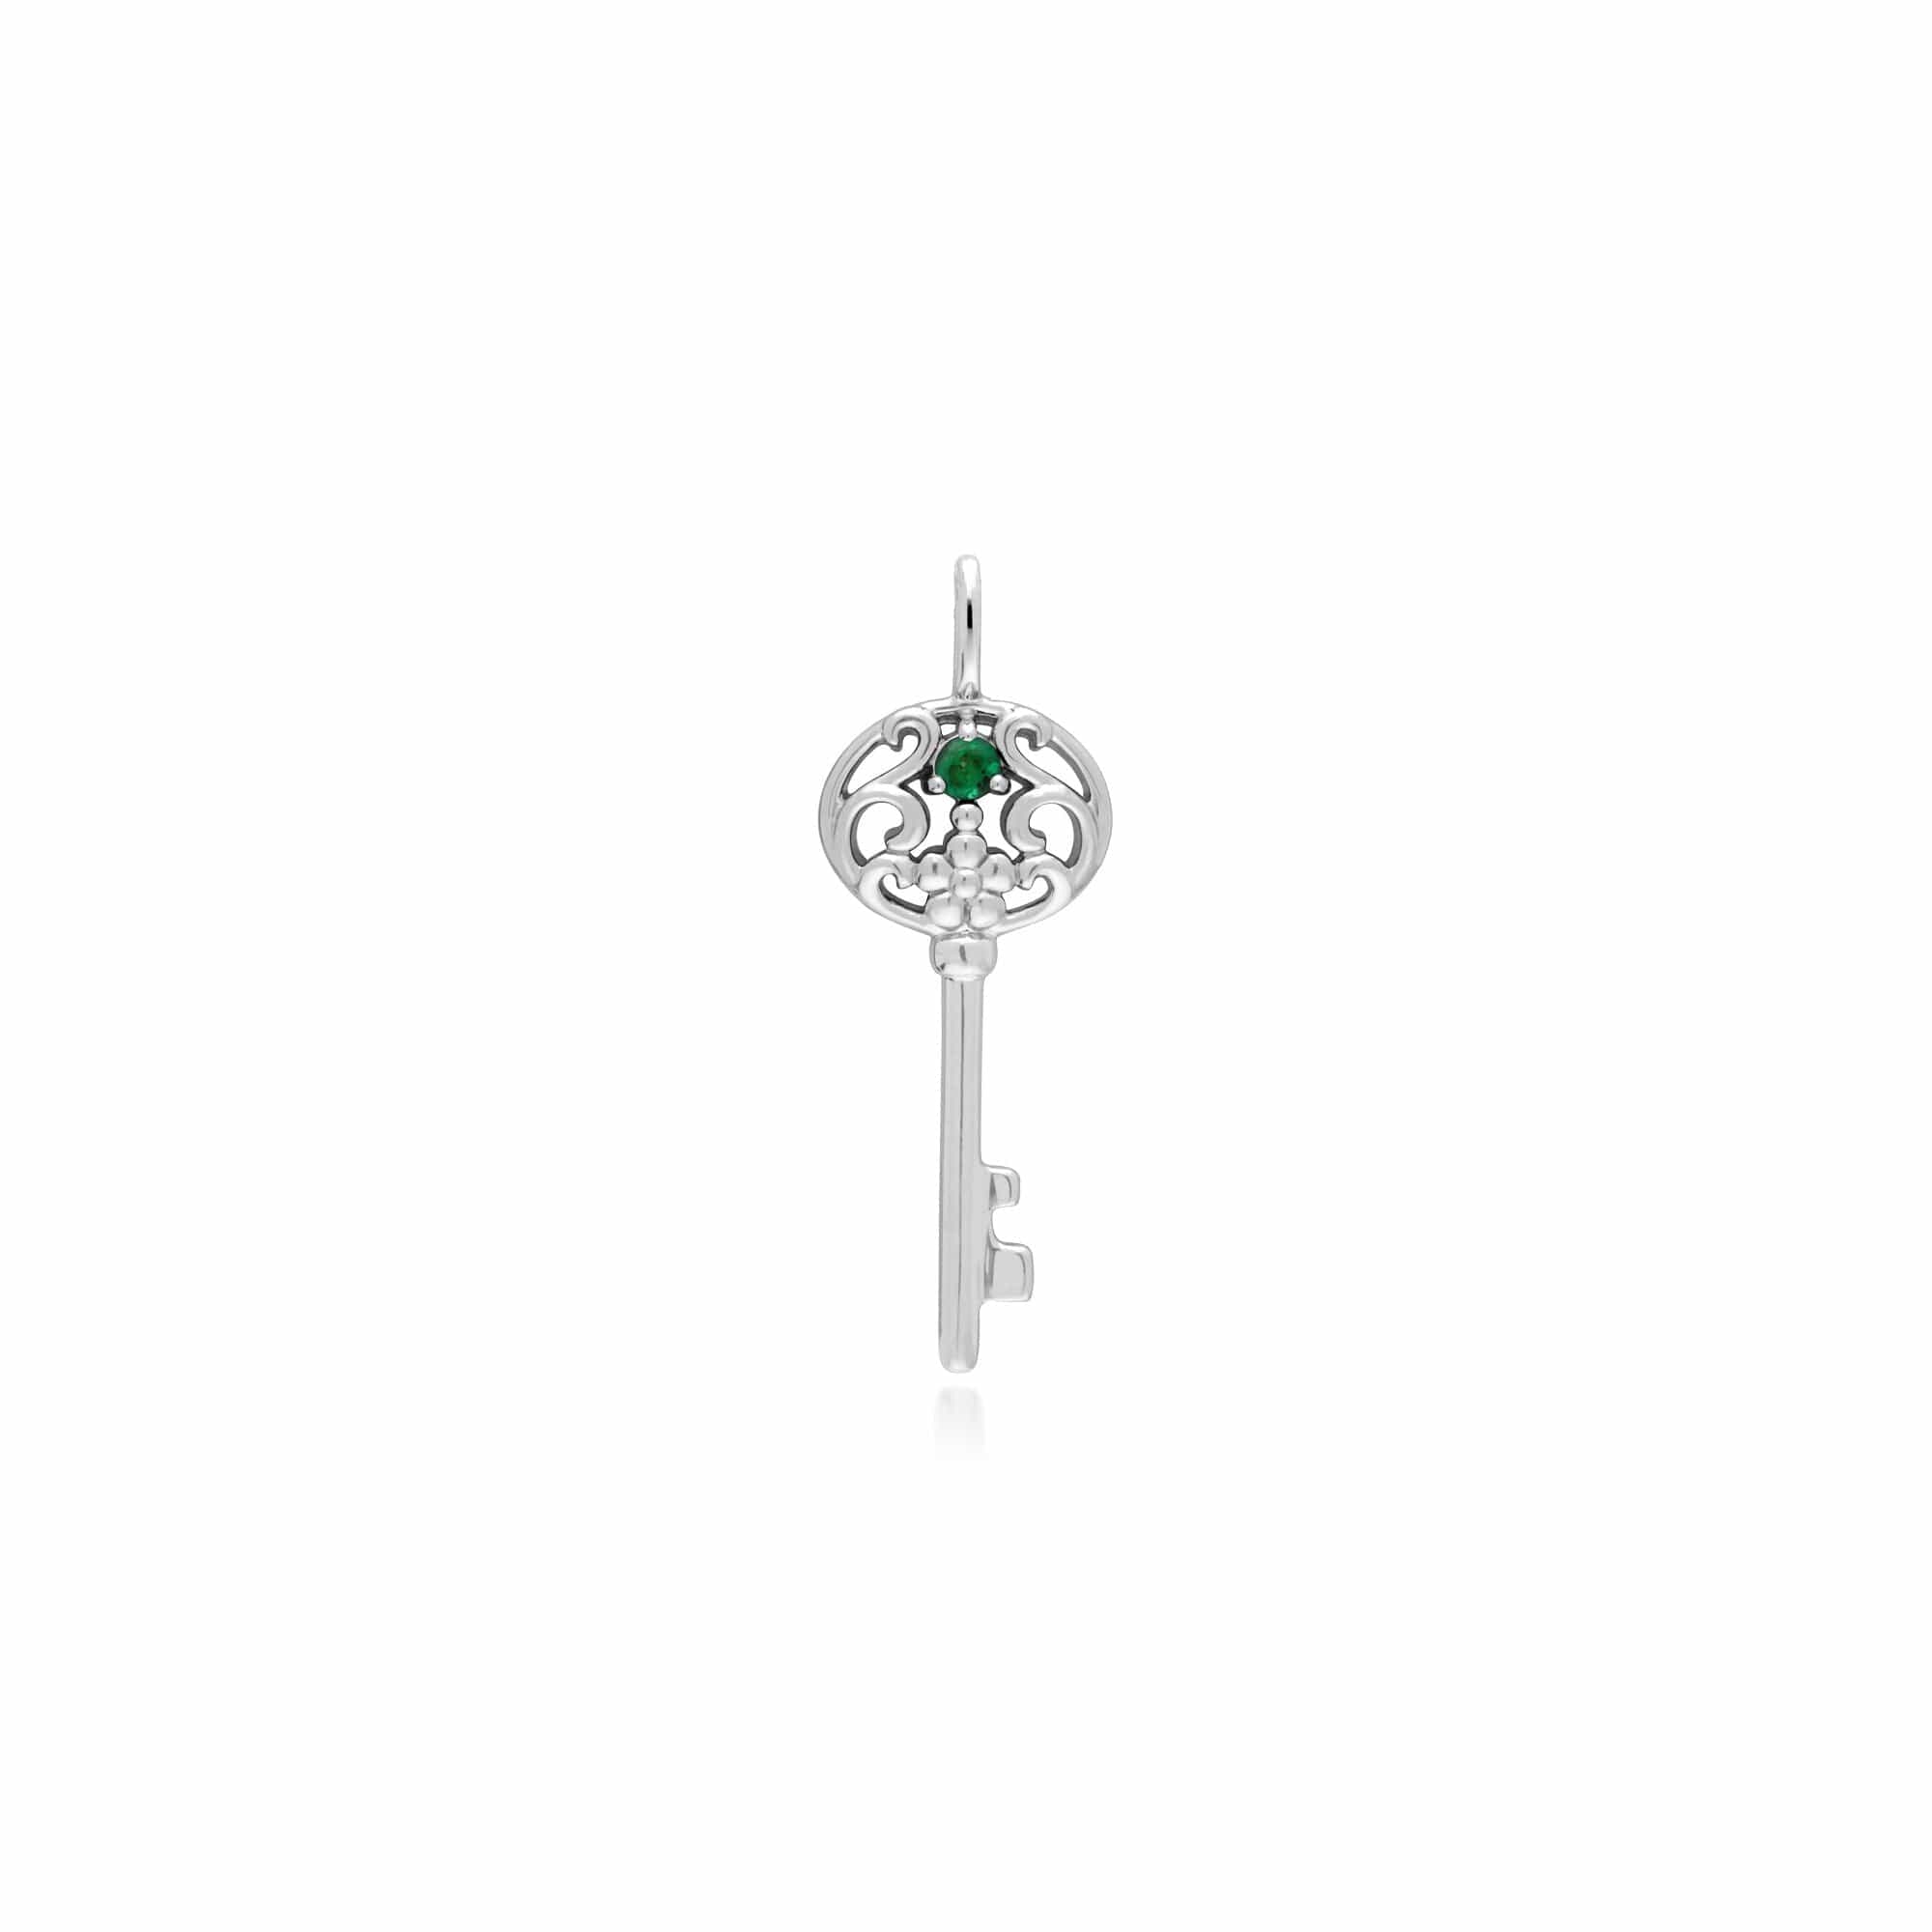 270P026807925-270P027001925 Classic Heart Lock Pendant & Emerald Big Key Charm in 925 Sterling Silver 2